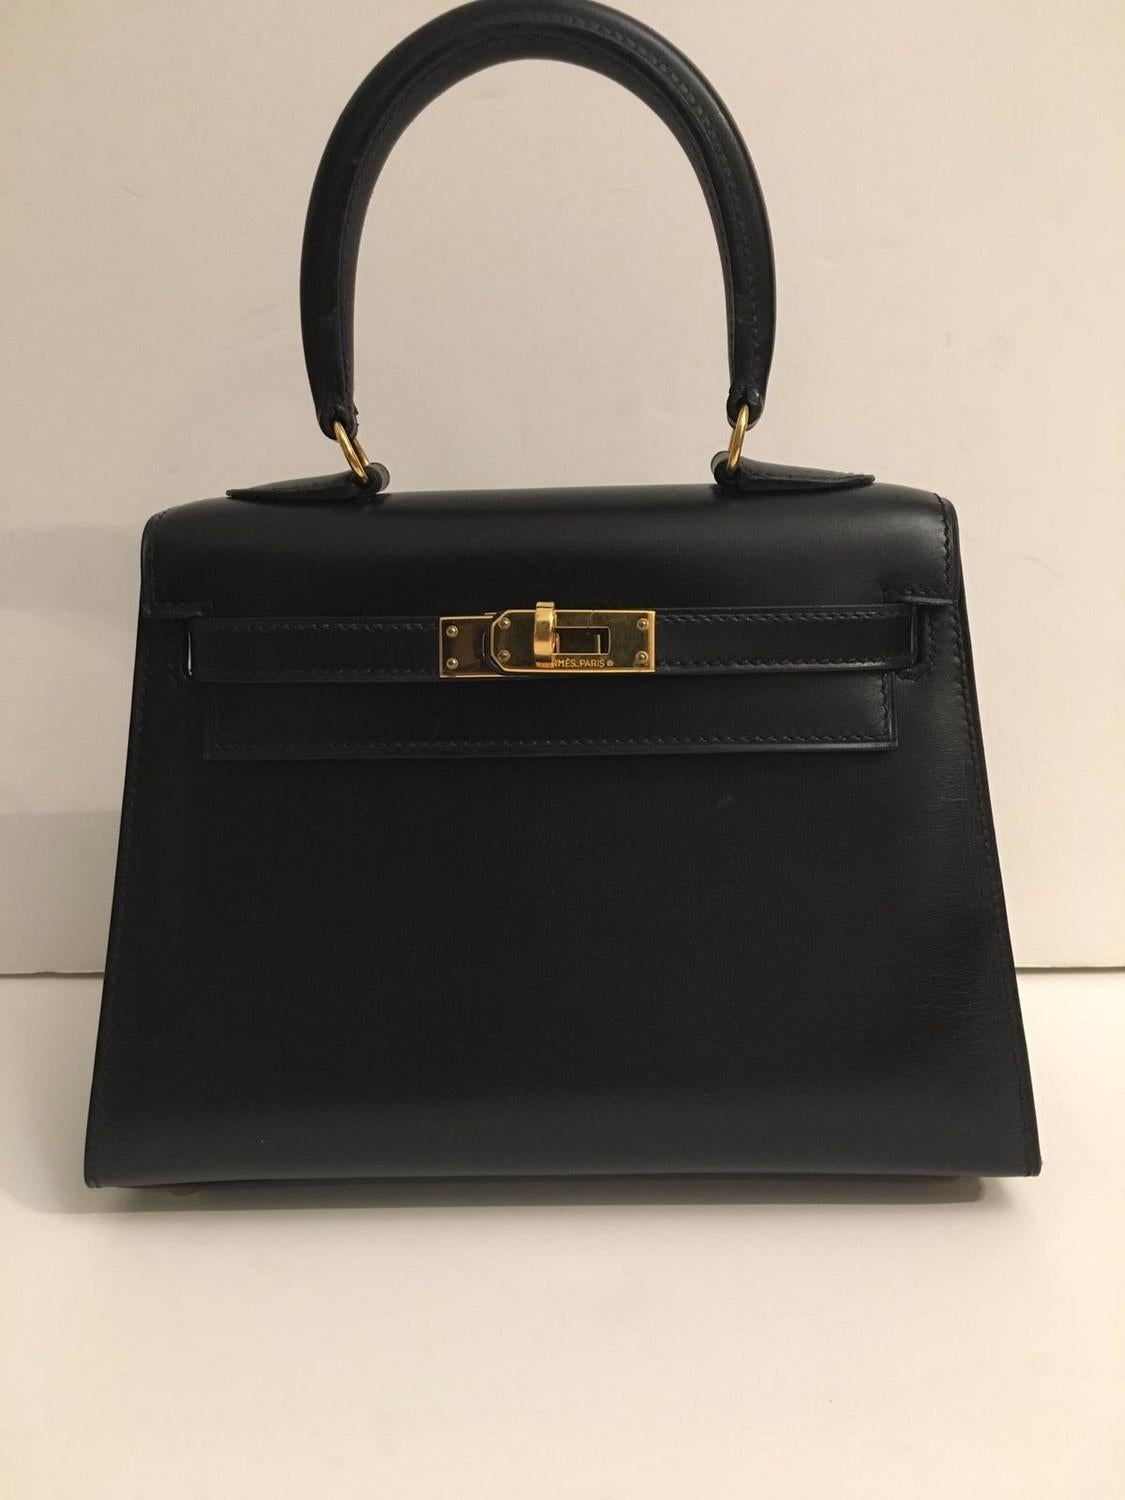 Beautiful Authentic Hermès Bag

Mini 